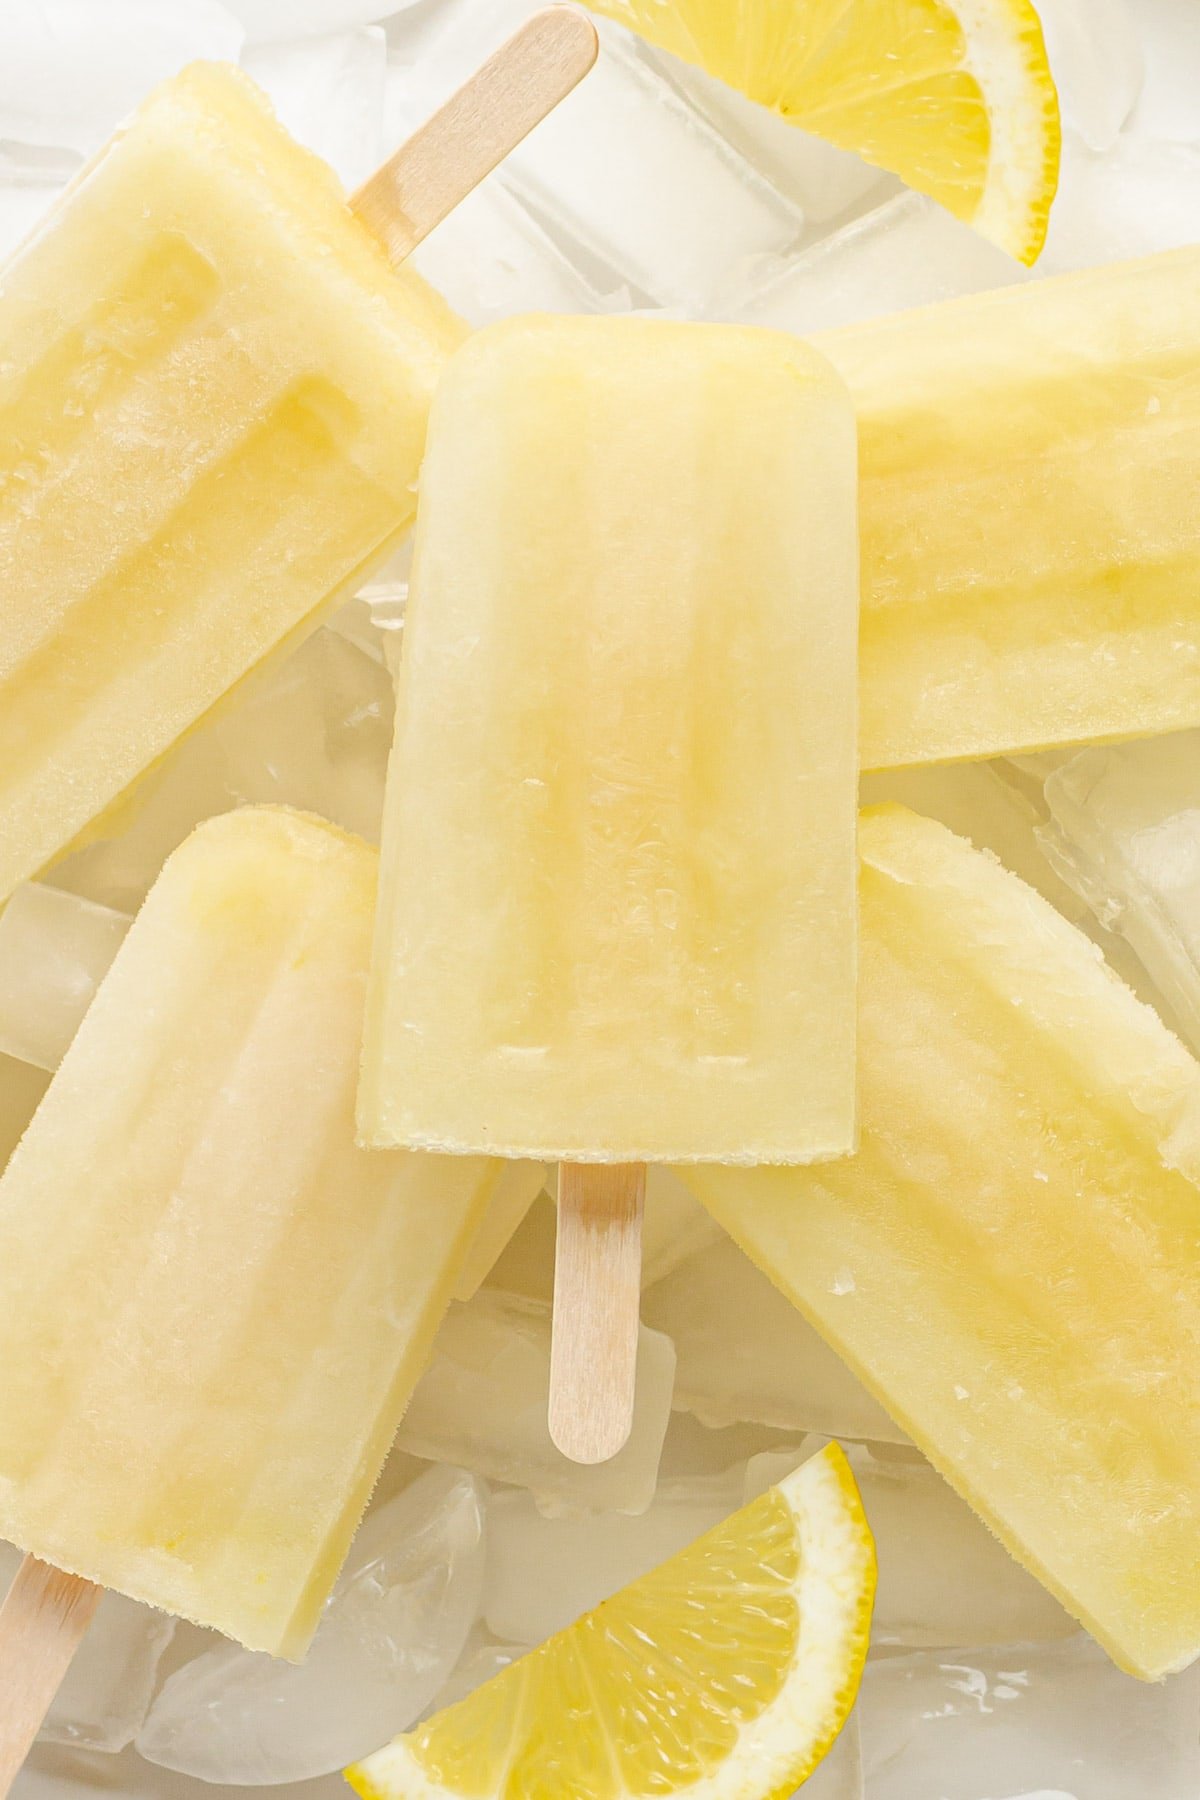 Closeup of lemon popsicles sitting on ice.